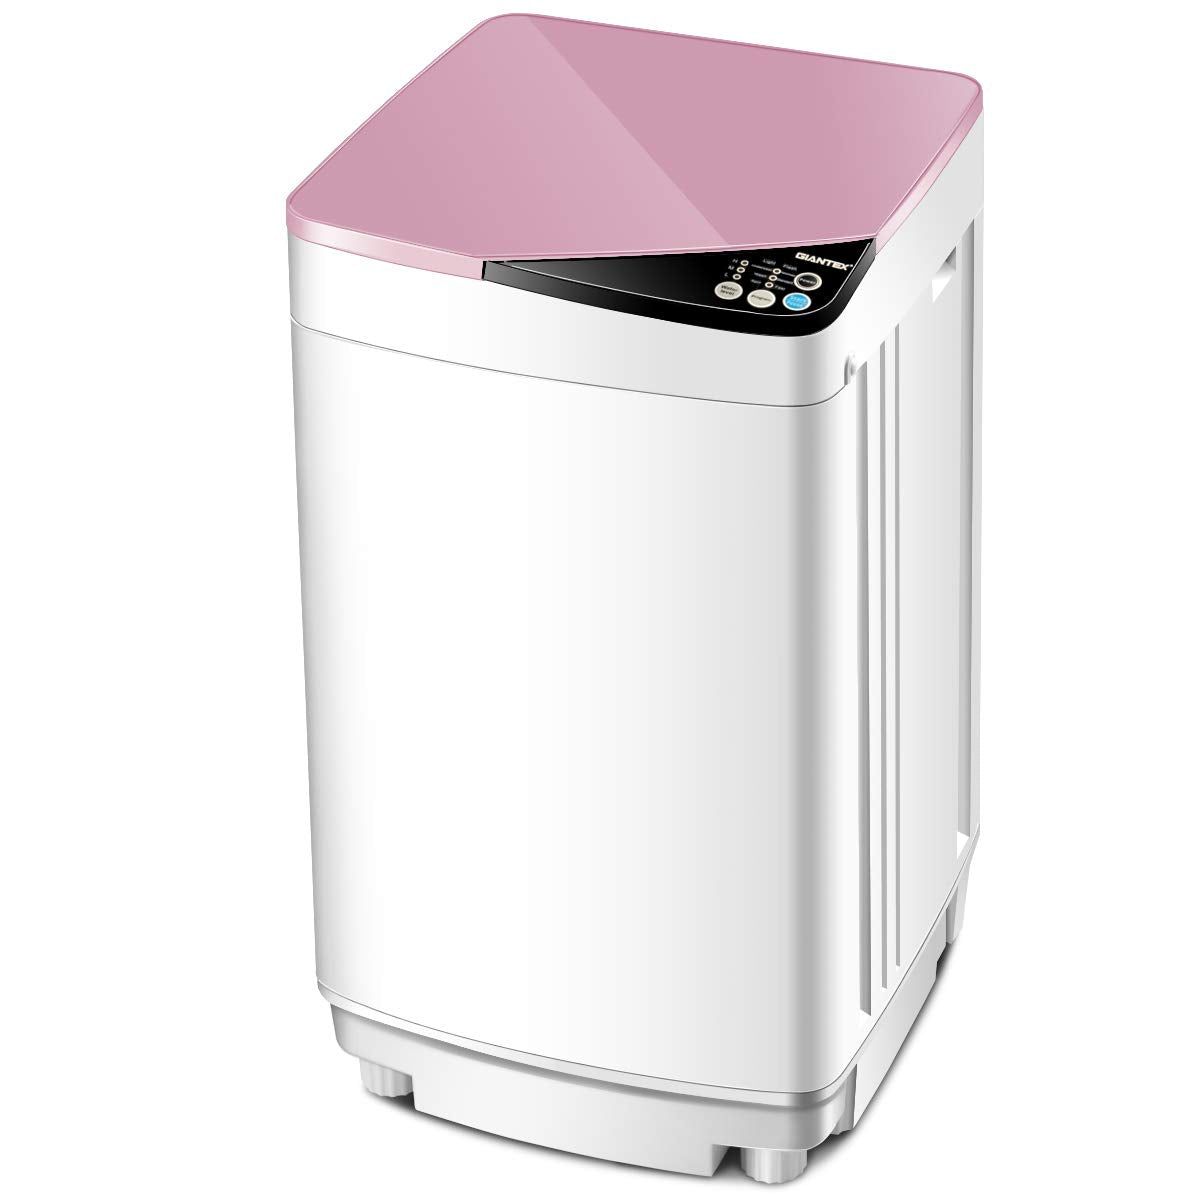 Foldable Mini Washing Machine - Portable Washer & Spin Dryer Combo, 3 Modes  - Pink 